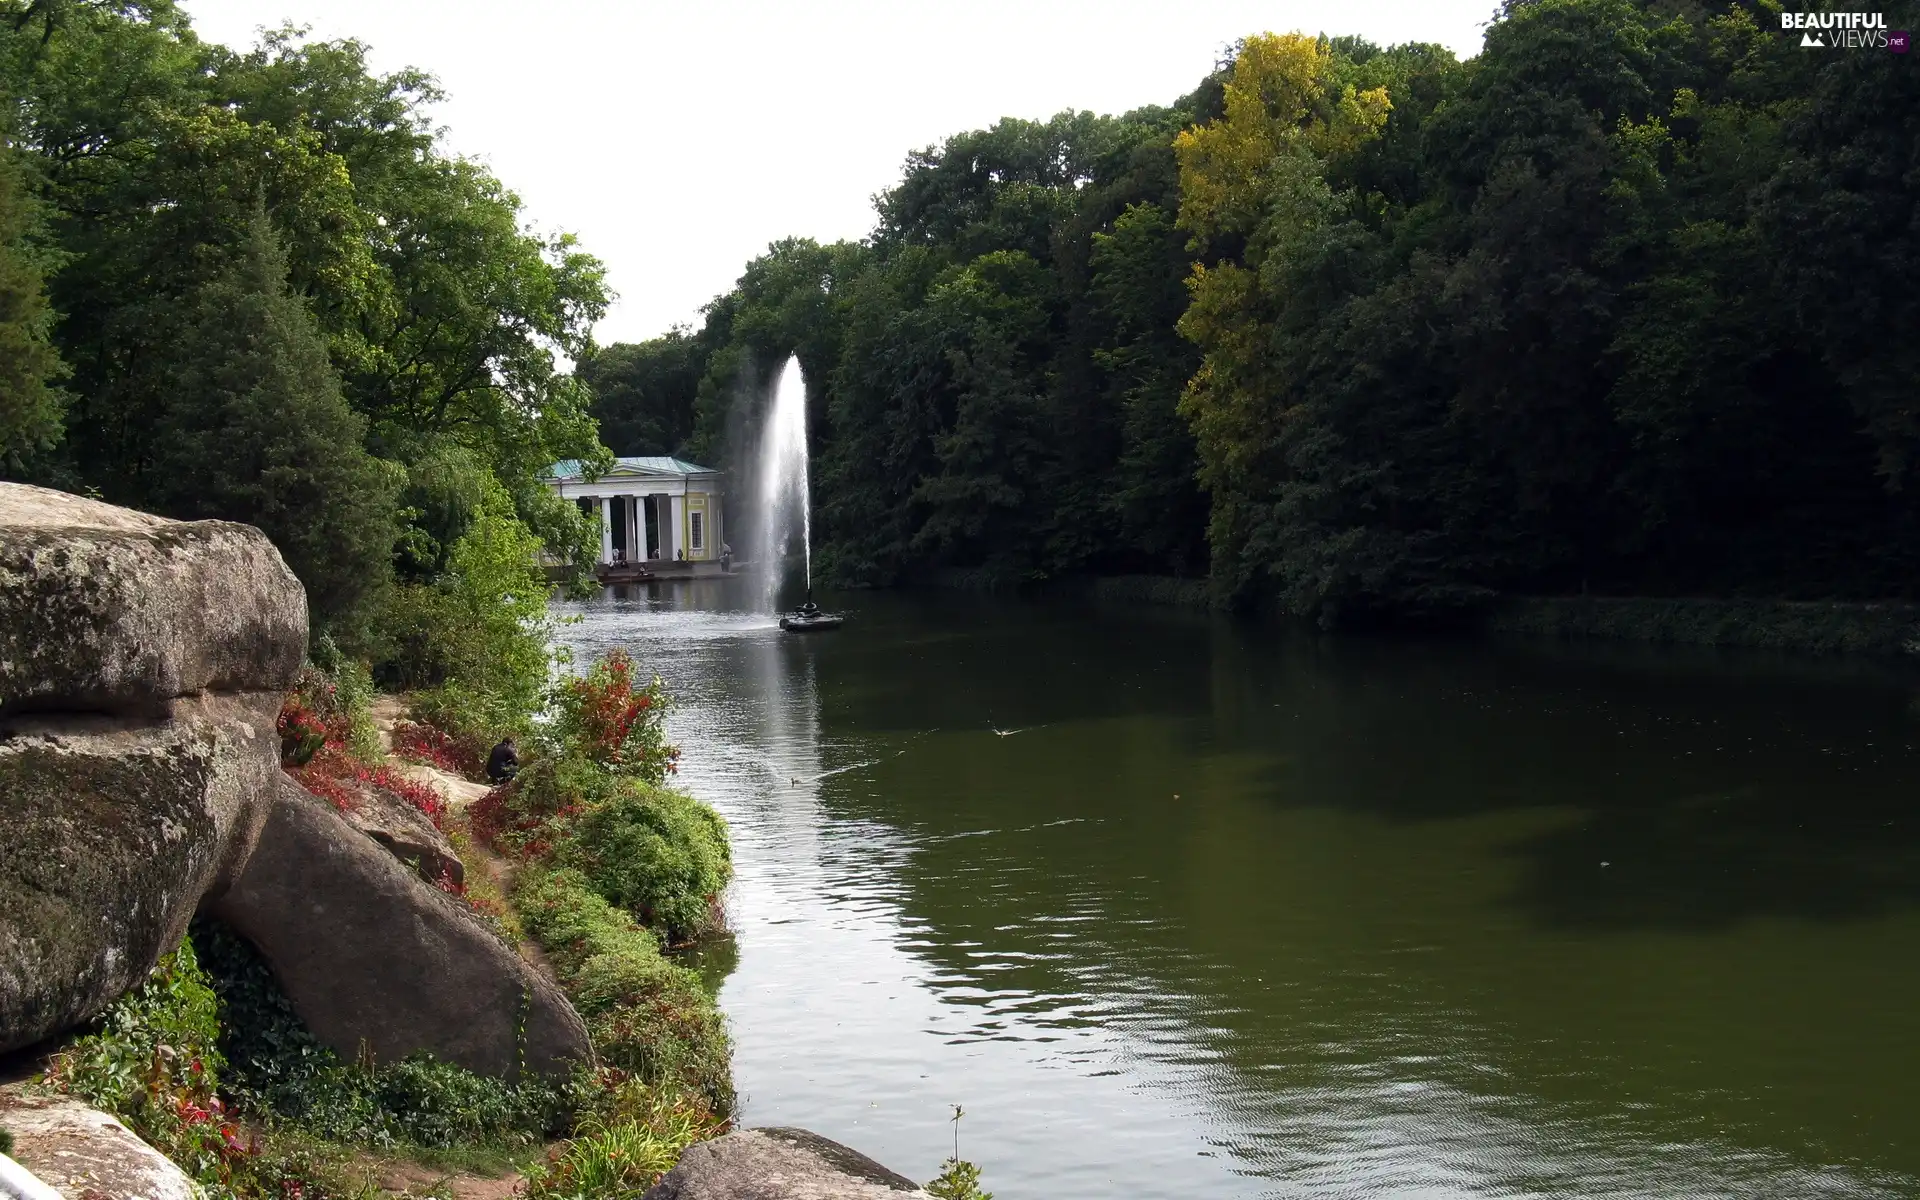 River, Home, Park, fountain